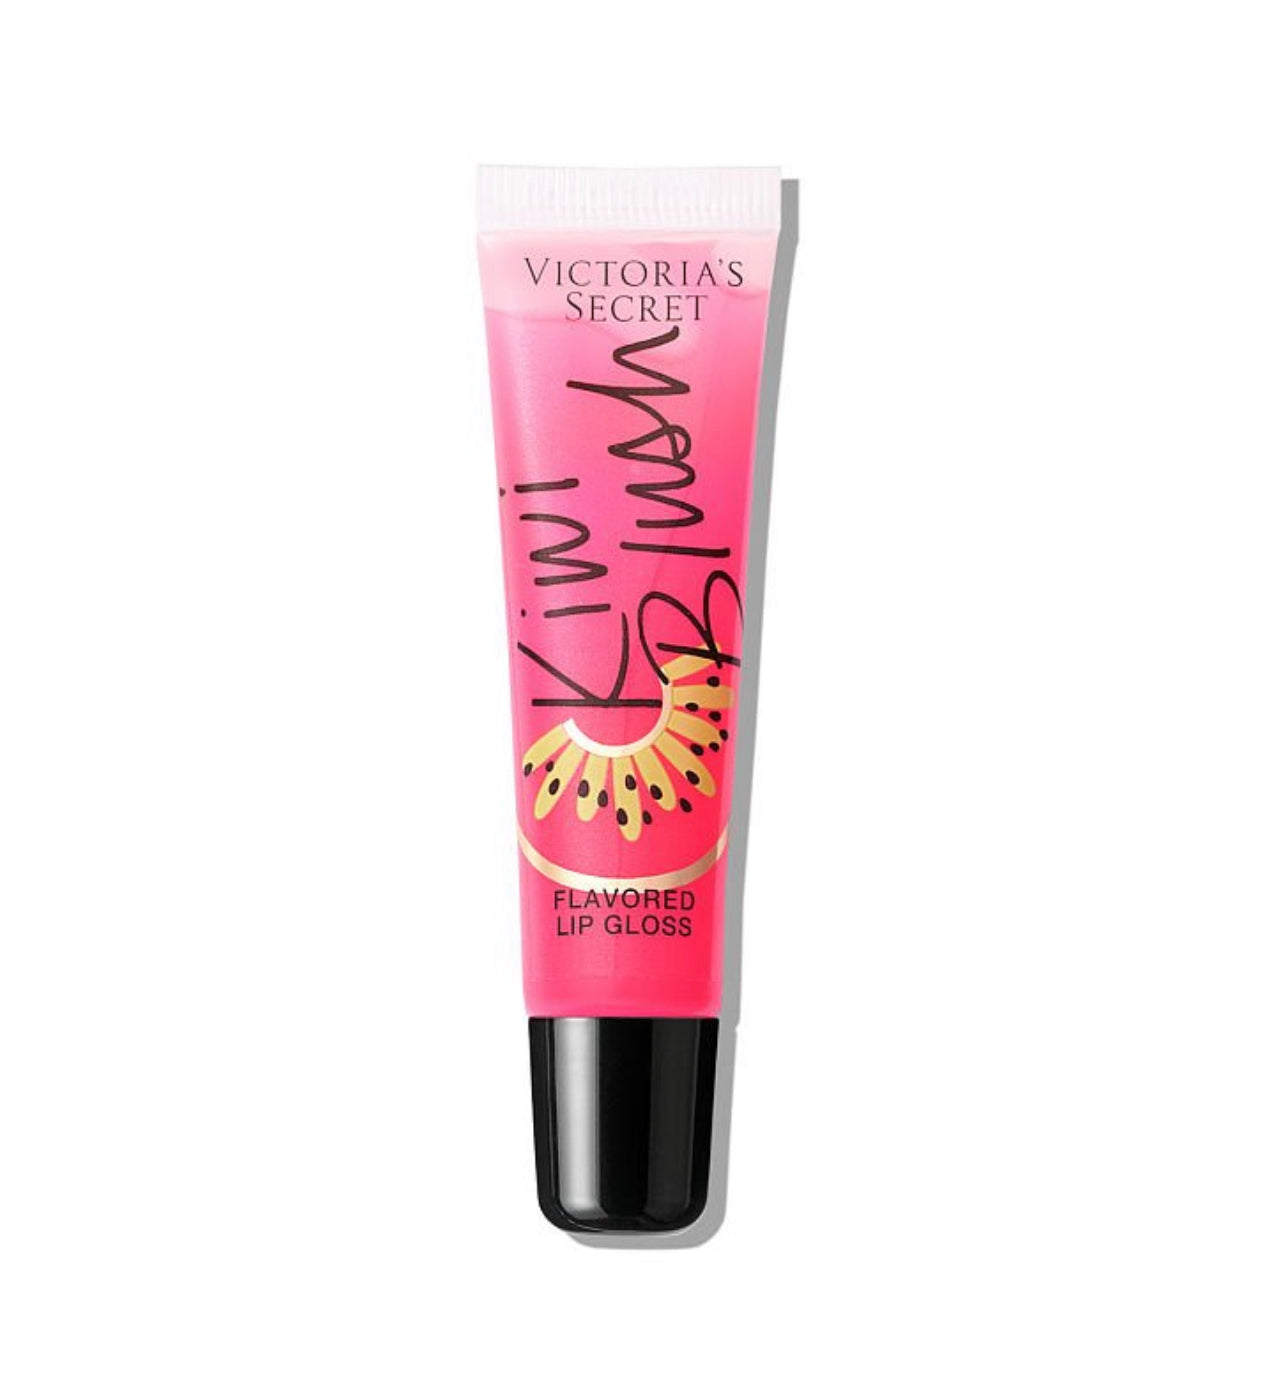 Victorias Secret flavored lip gloss